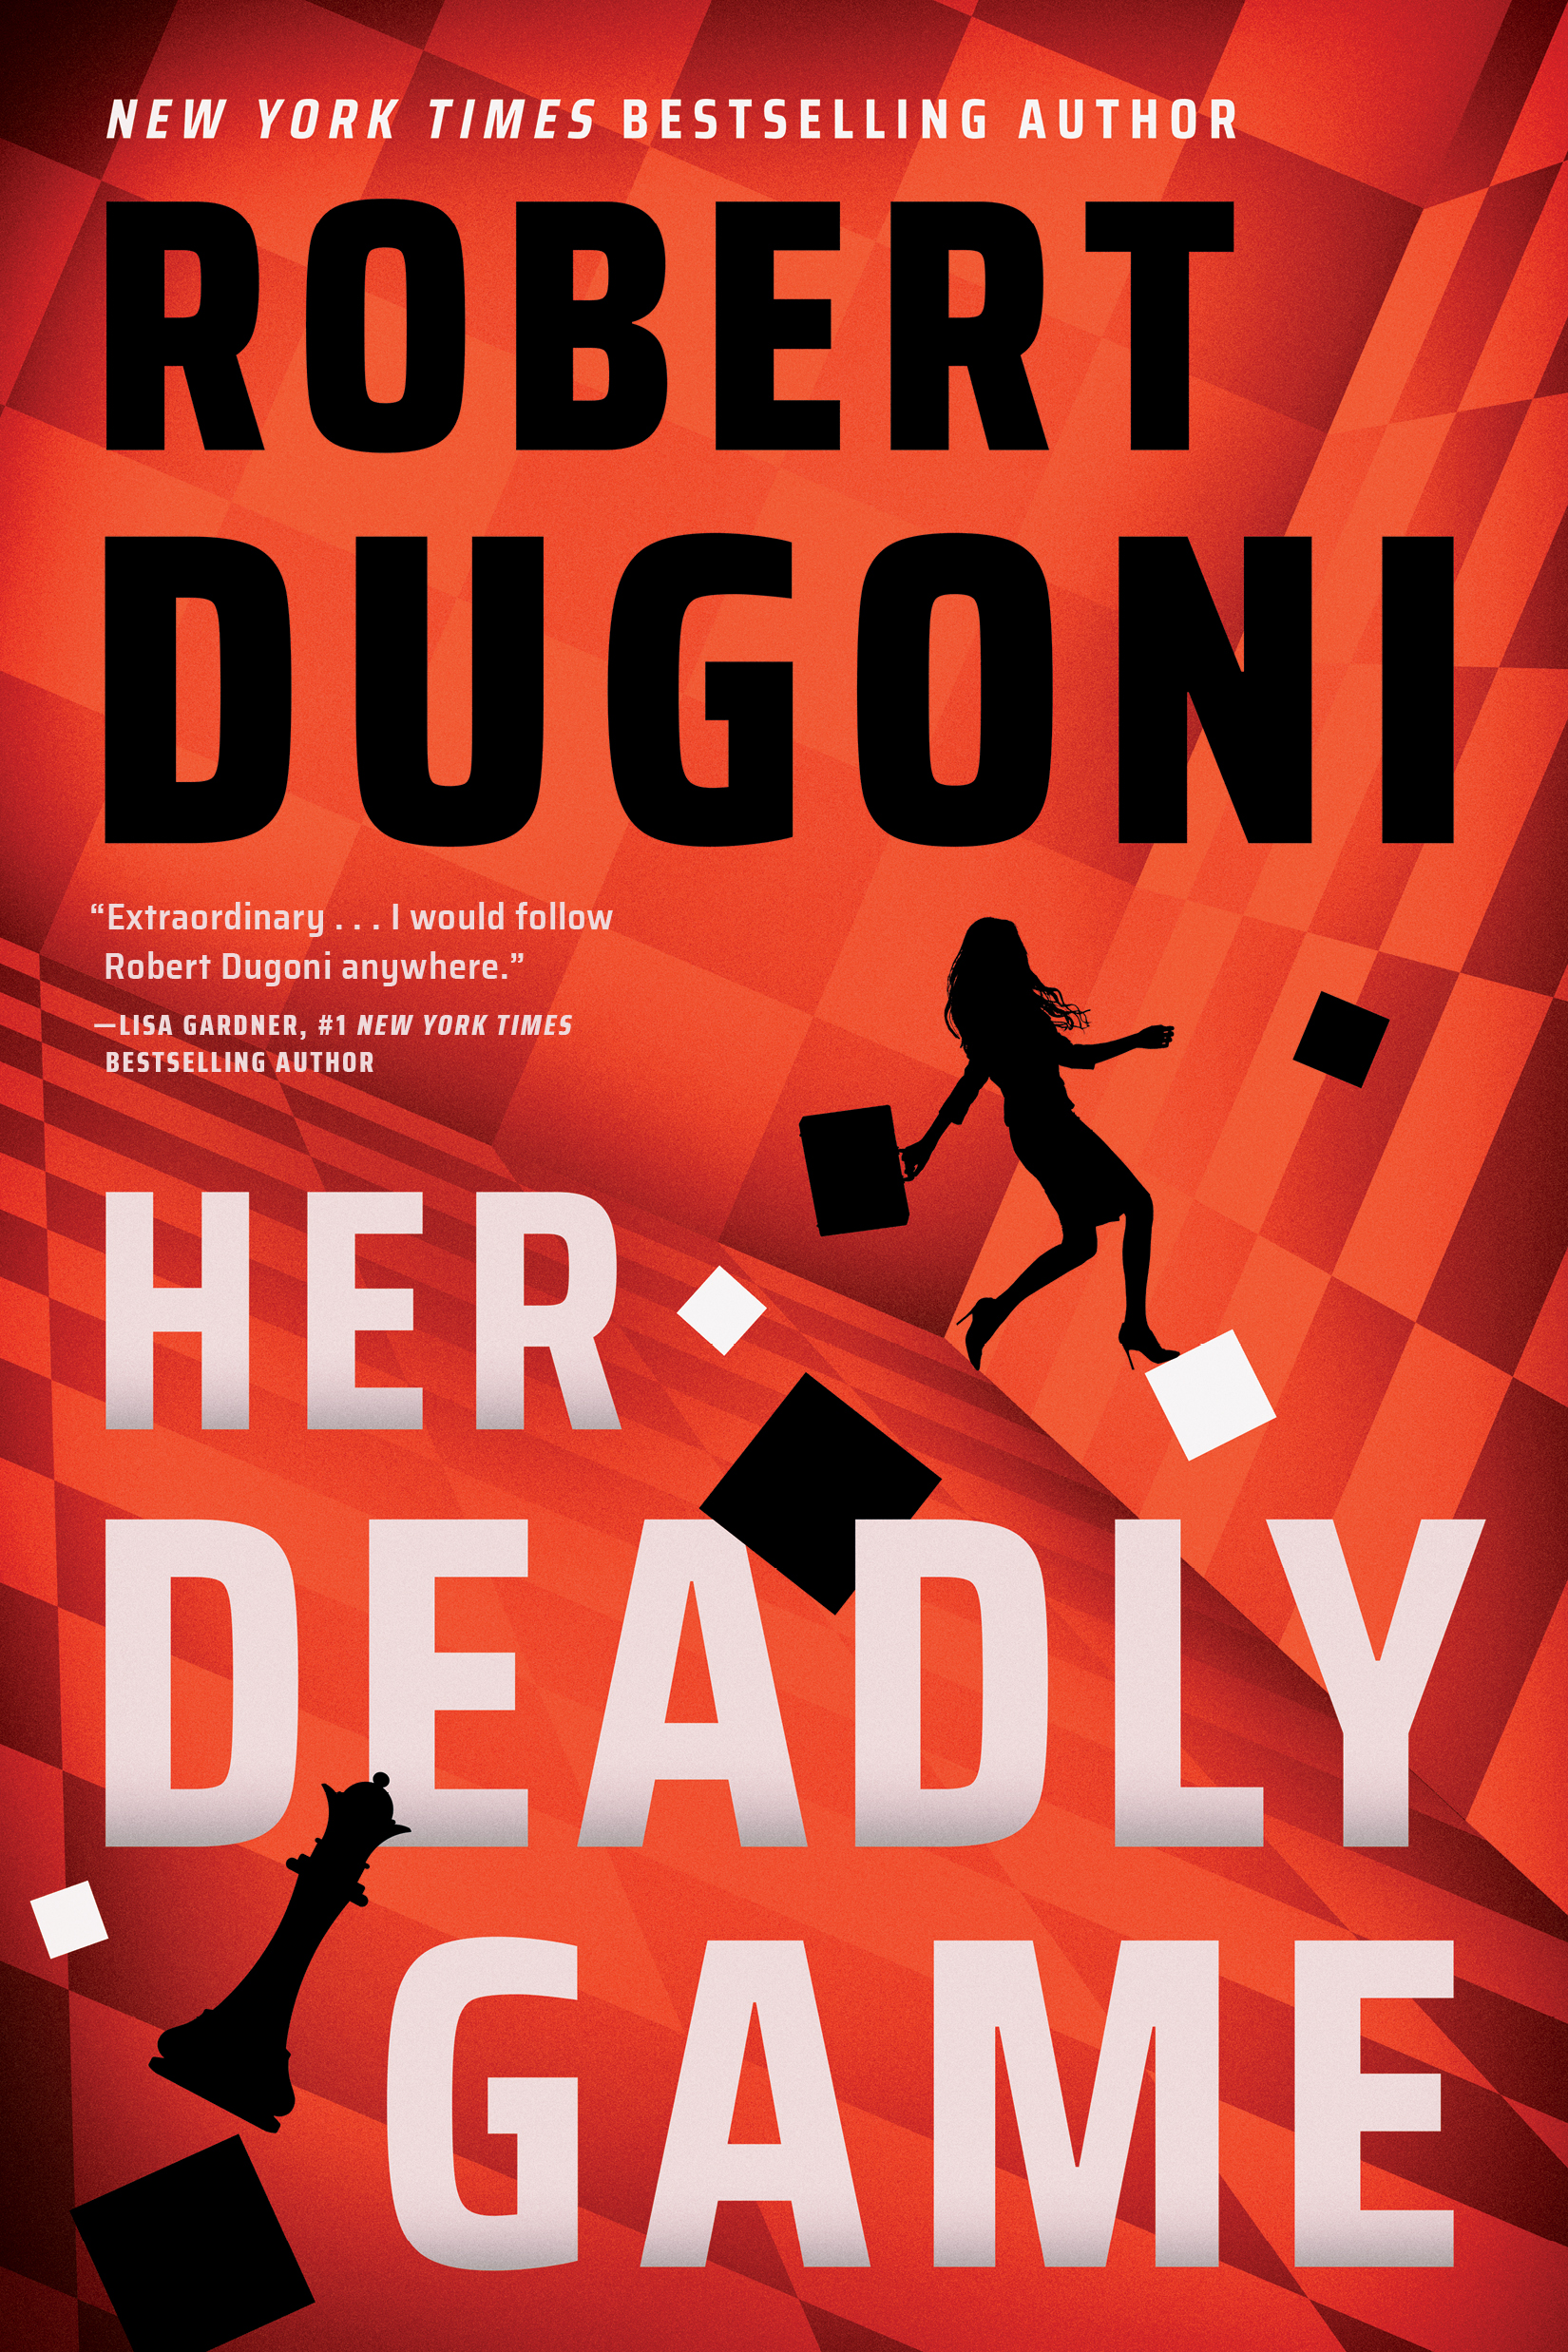 Her Deadly Game (Keera Duggan #1) PDF Download